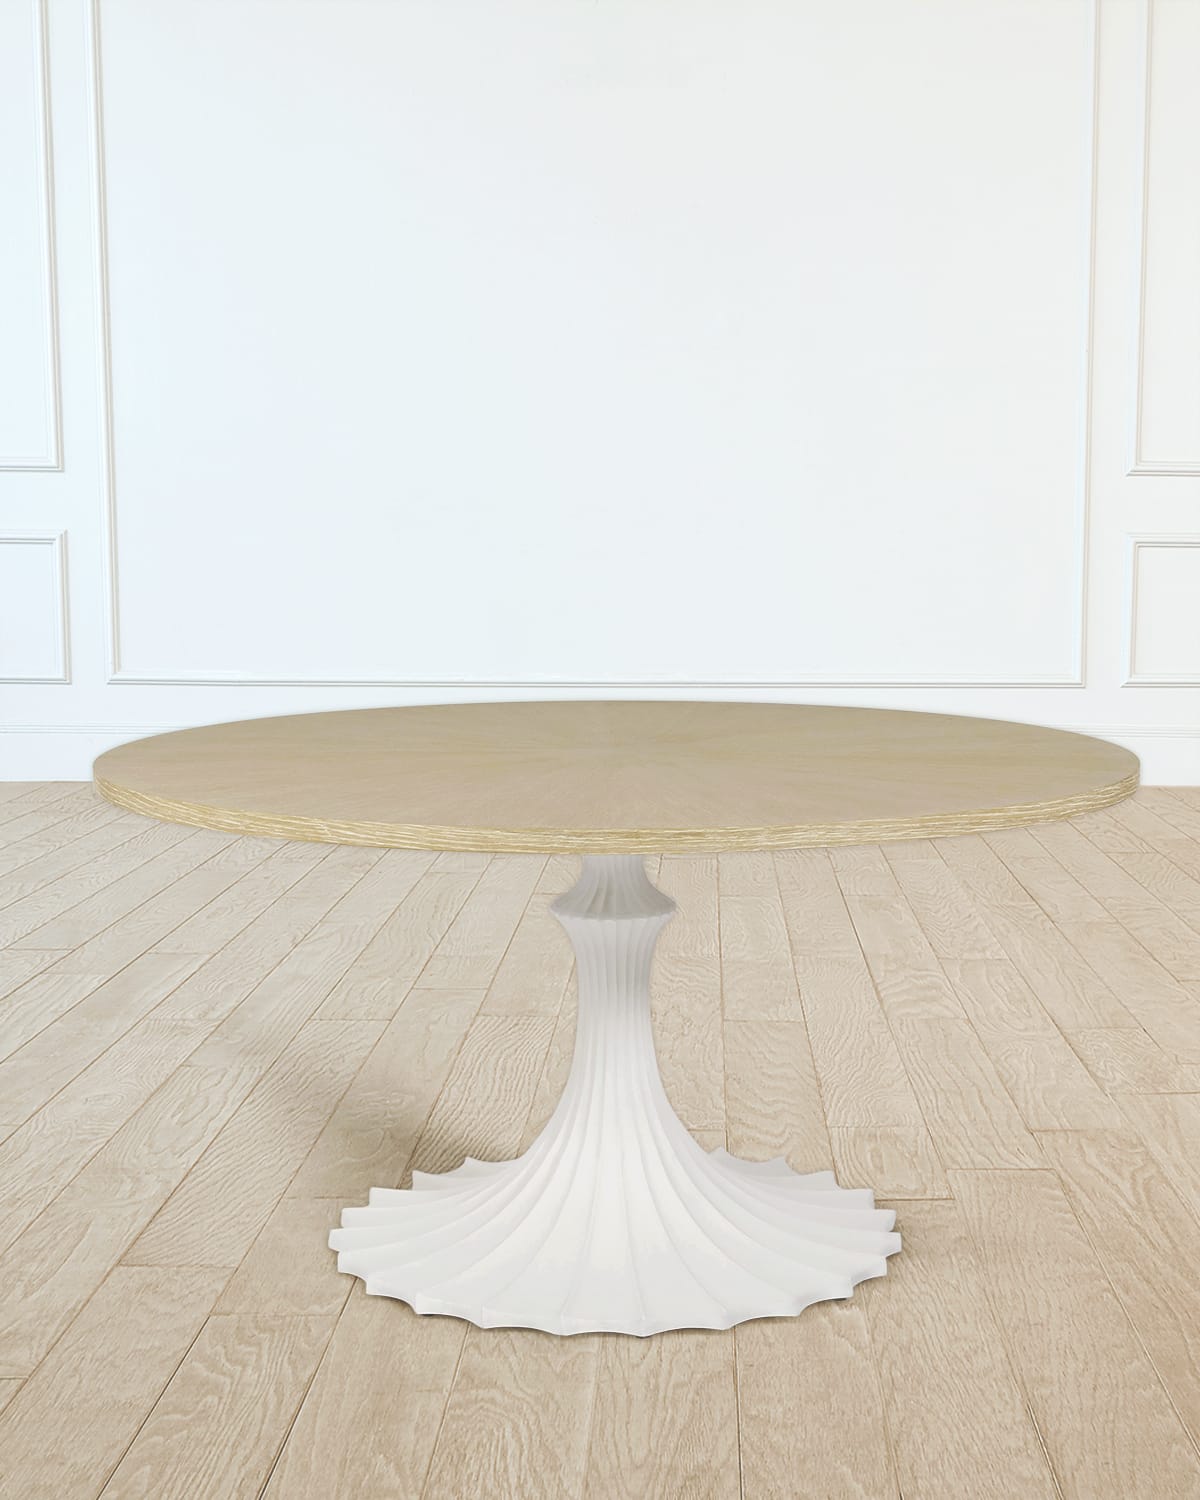 TABLETOP: “WEDGWOOD WHITE” BONE CHINA – The Weathered Grey Table